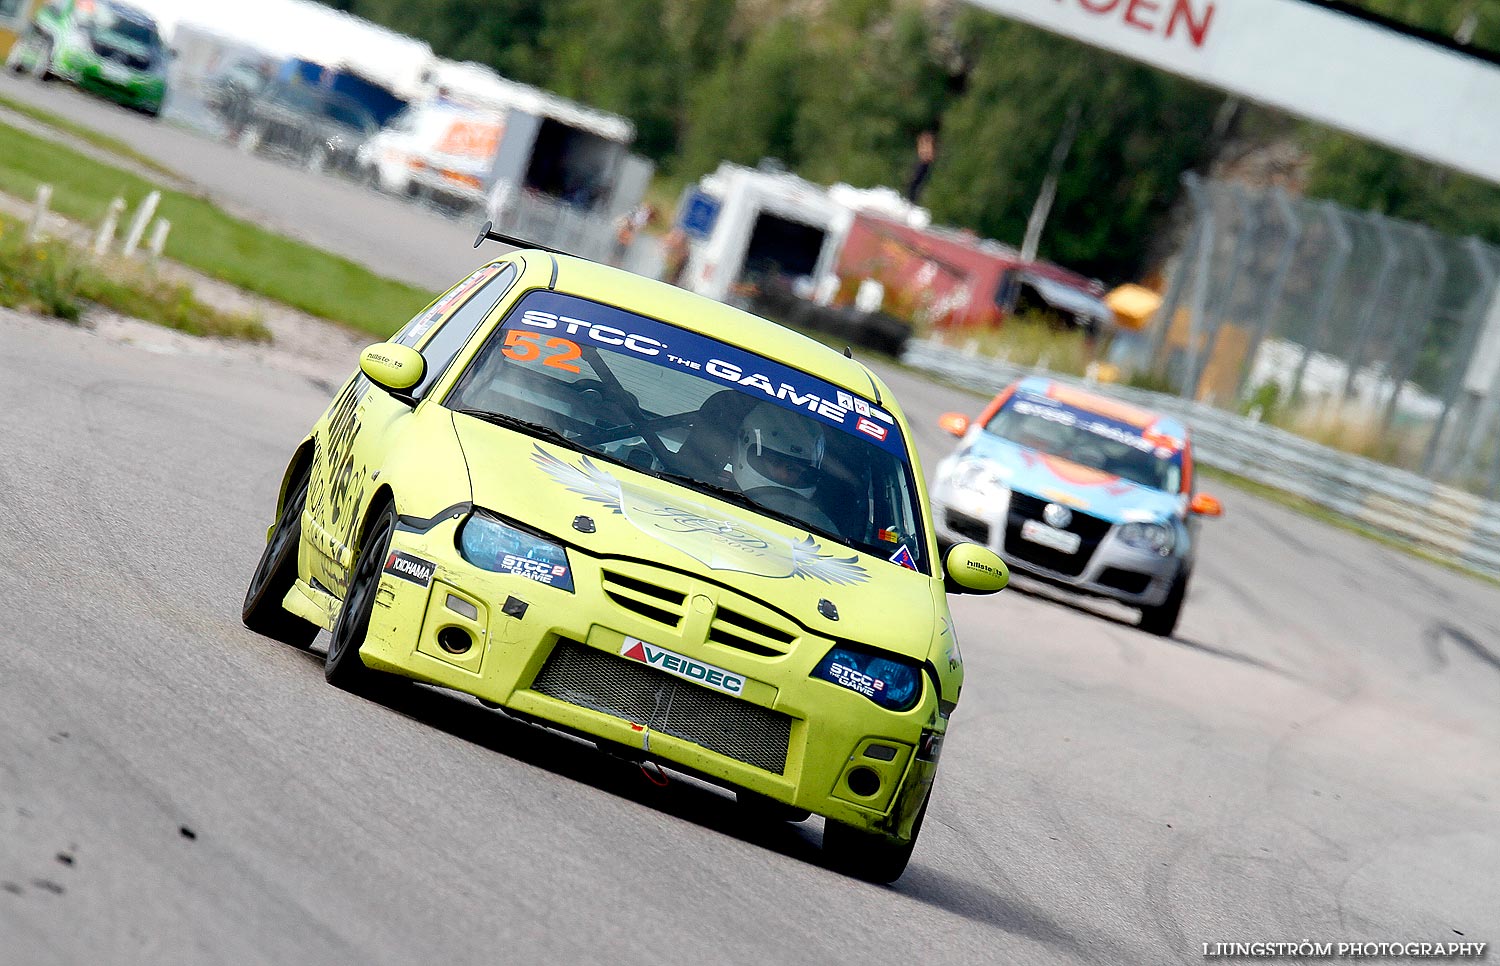 SSK Raceweek,mix,Kinnekulle Ring,Götene,Sverige,Motorsport,,2011,44493